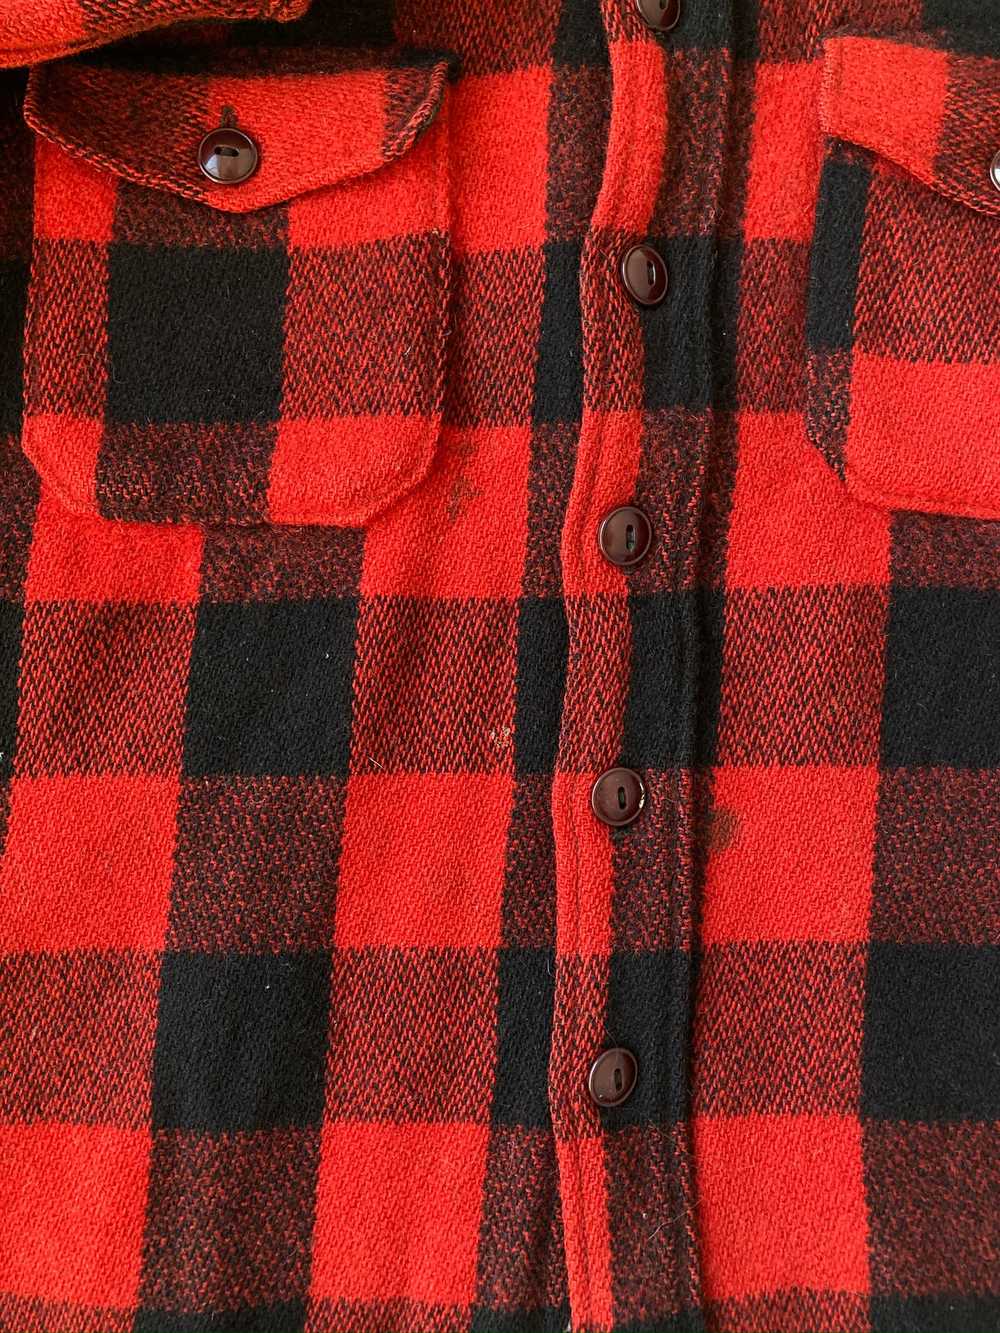 Buffalo Plaid Wool Shirt 50's - Large - image 3